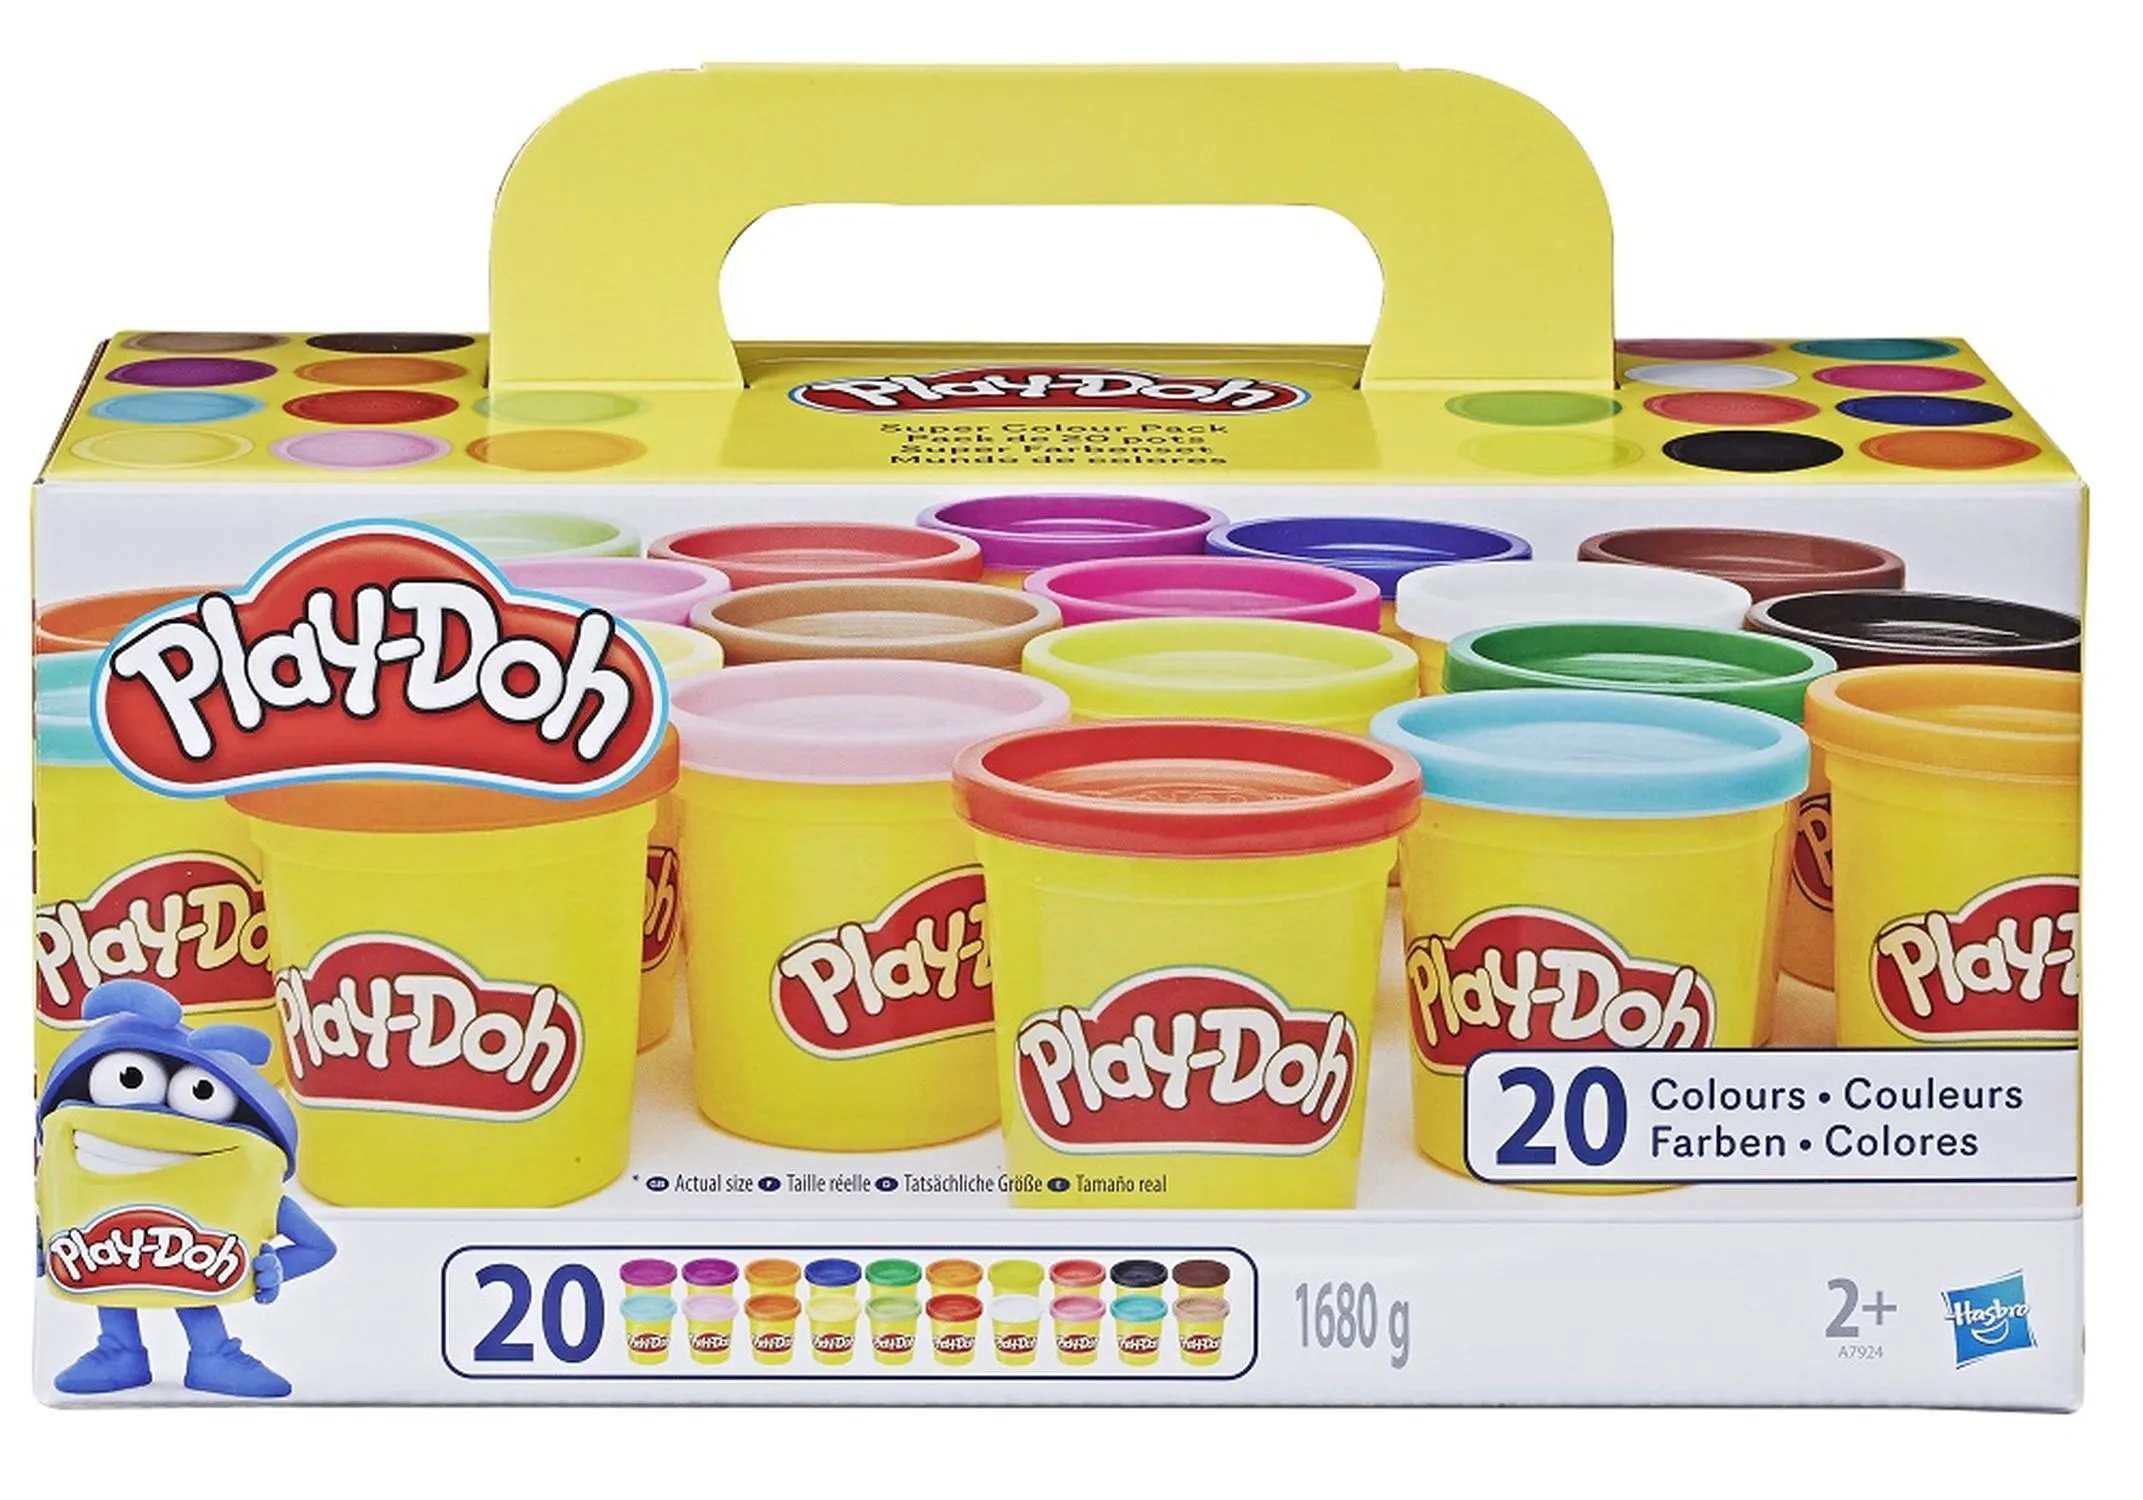 Большой набор пластилина. Пластилин Play-Doh 20 цветов. Плей до набор пластилина 20 банок. Набор пластилина 20 банок PD a7924. Пластилин плей до 20 банок.